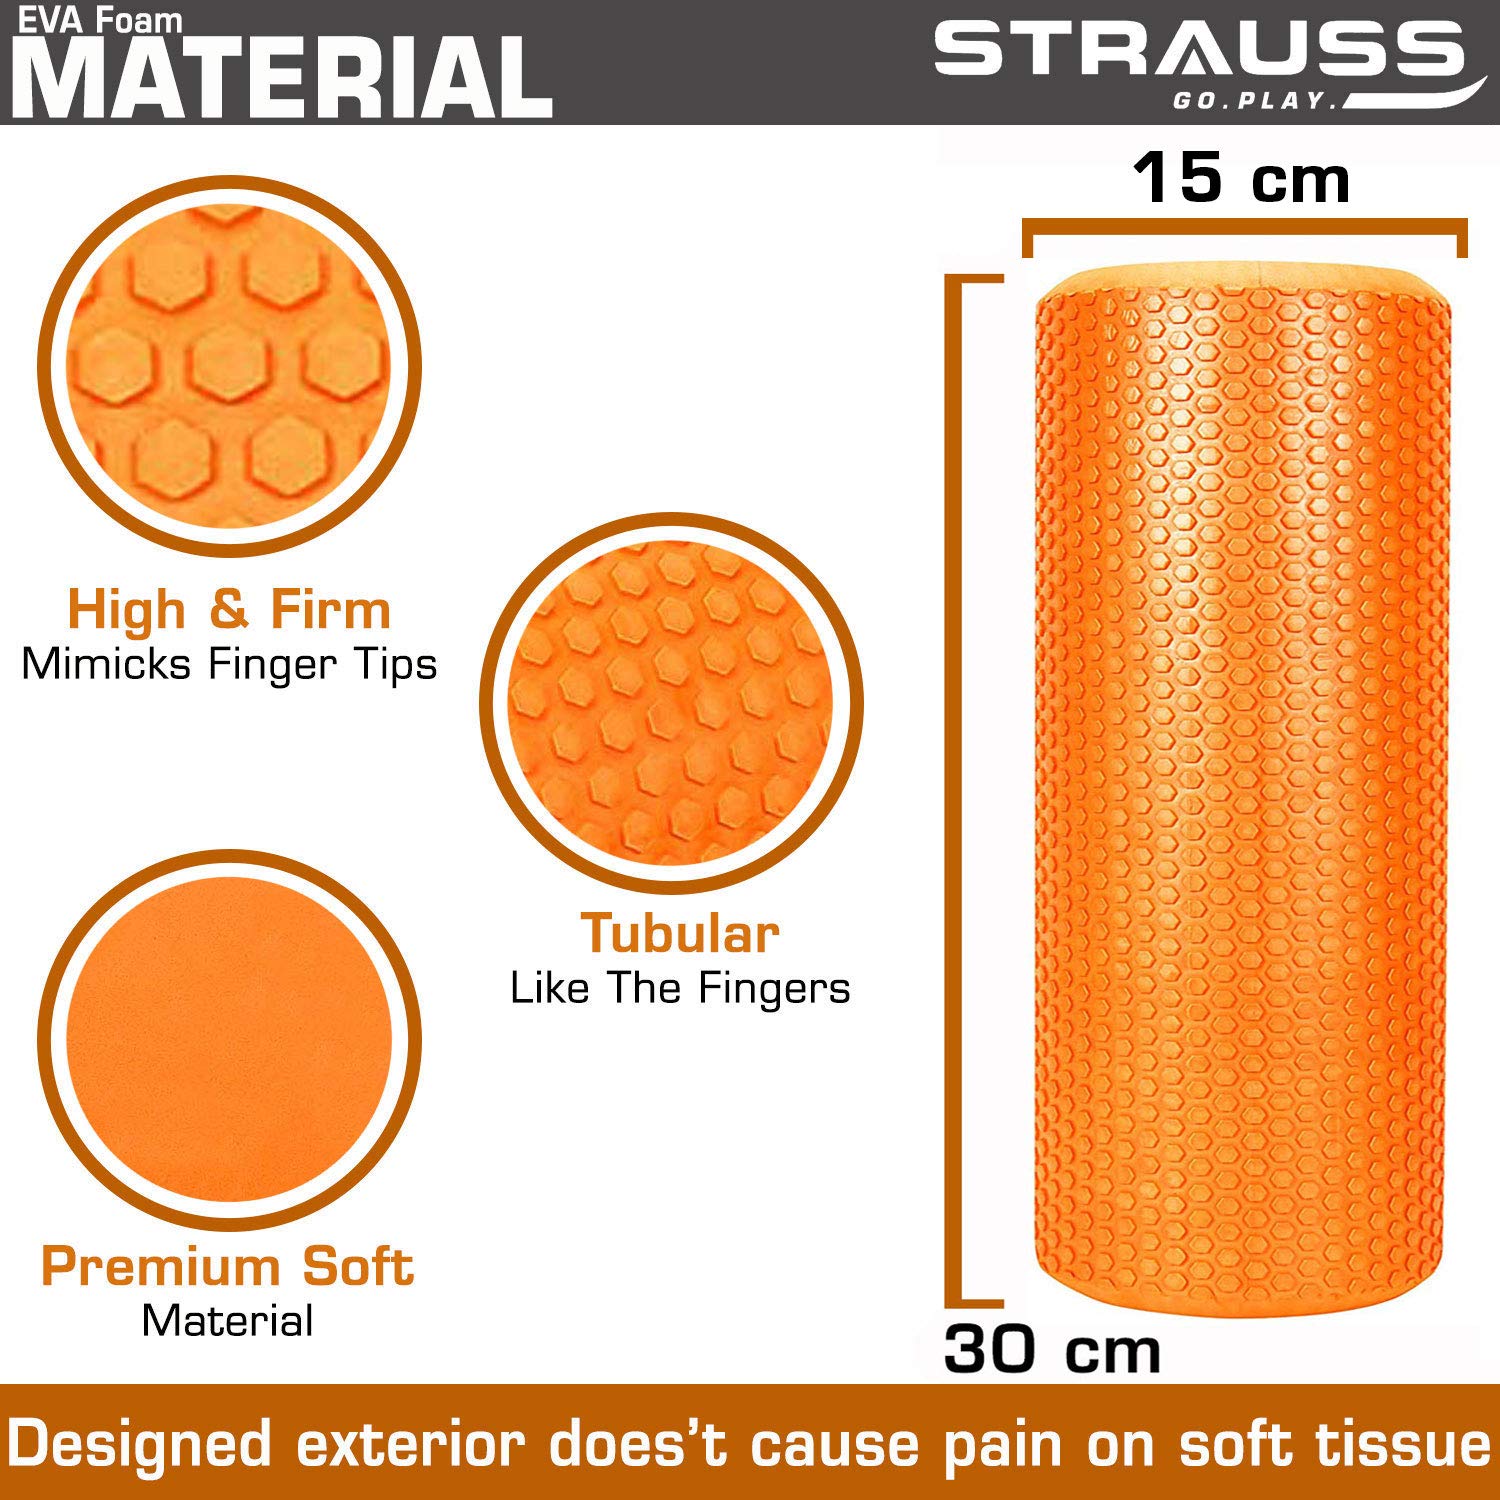 Strauss Foam Roller (Orange), 30 cm and Dual Yoga Massage Ball, (Blue)